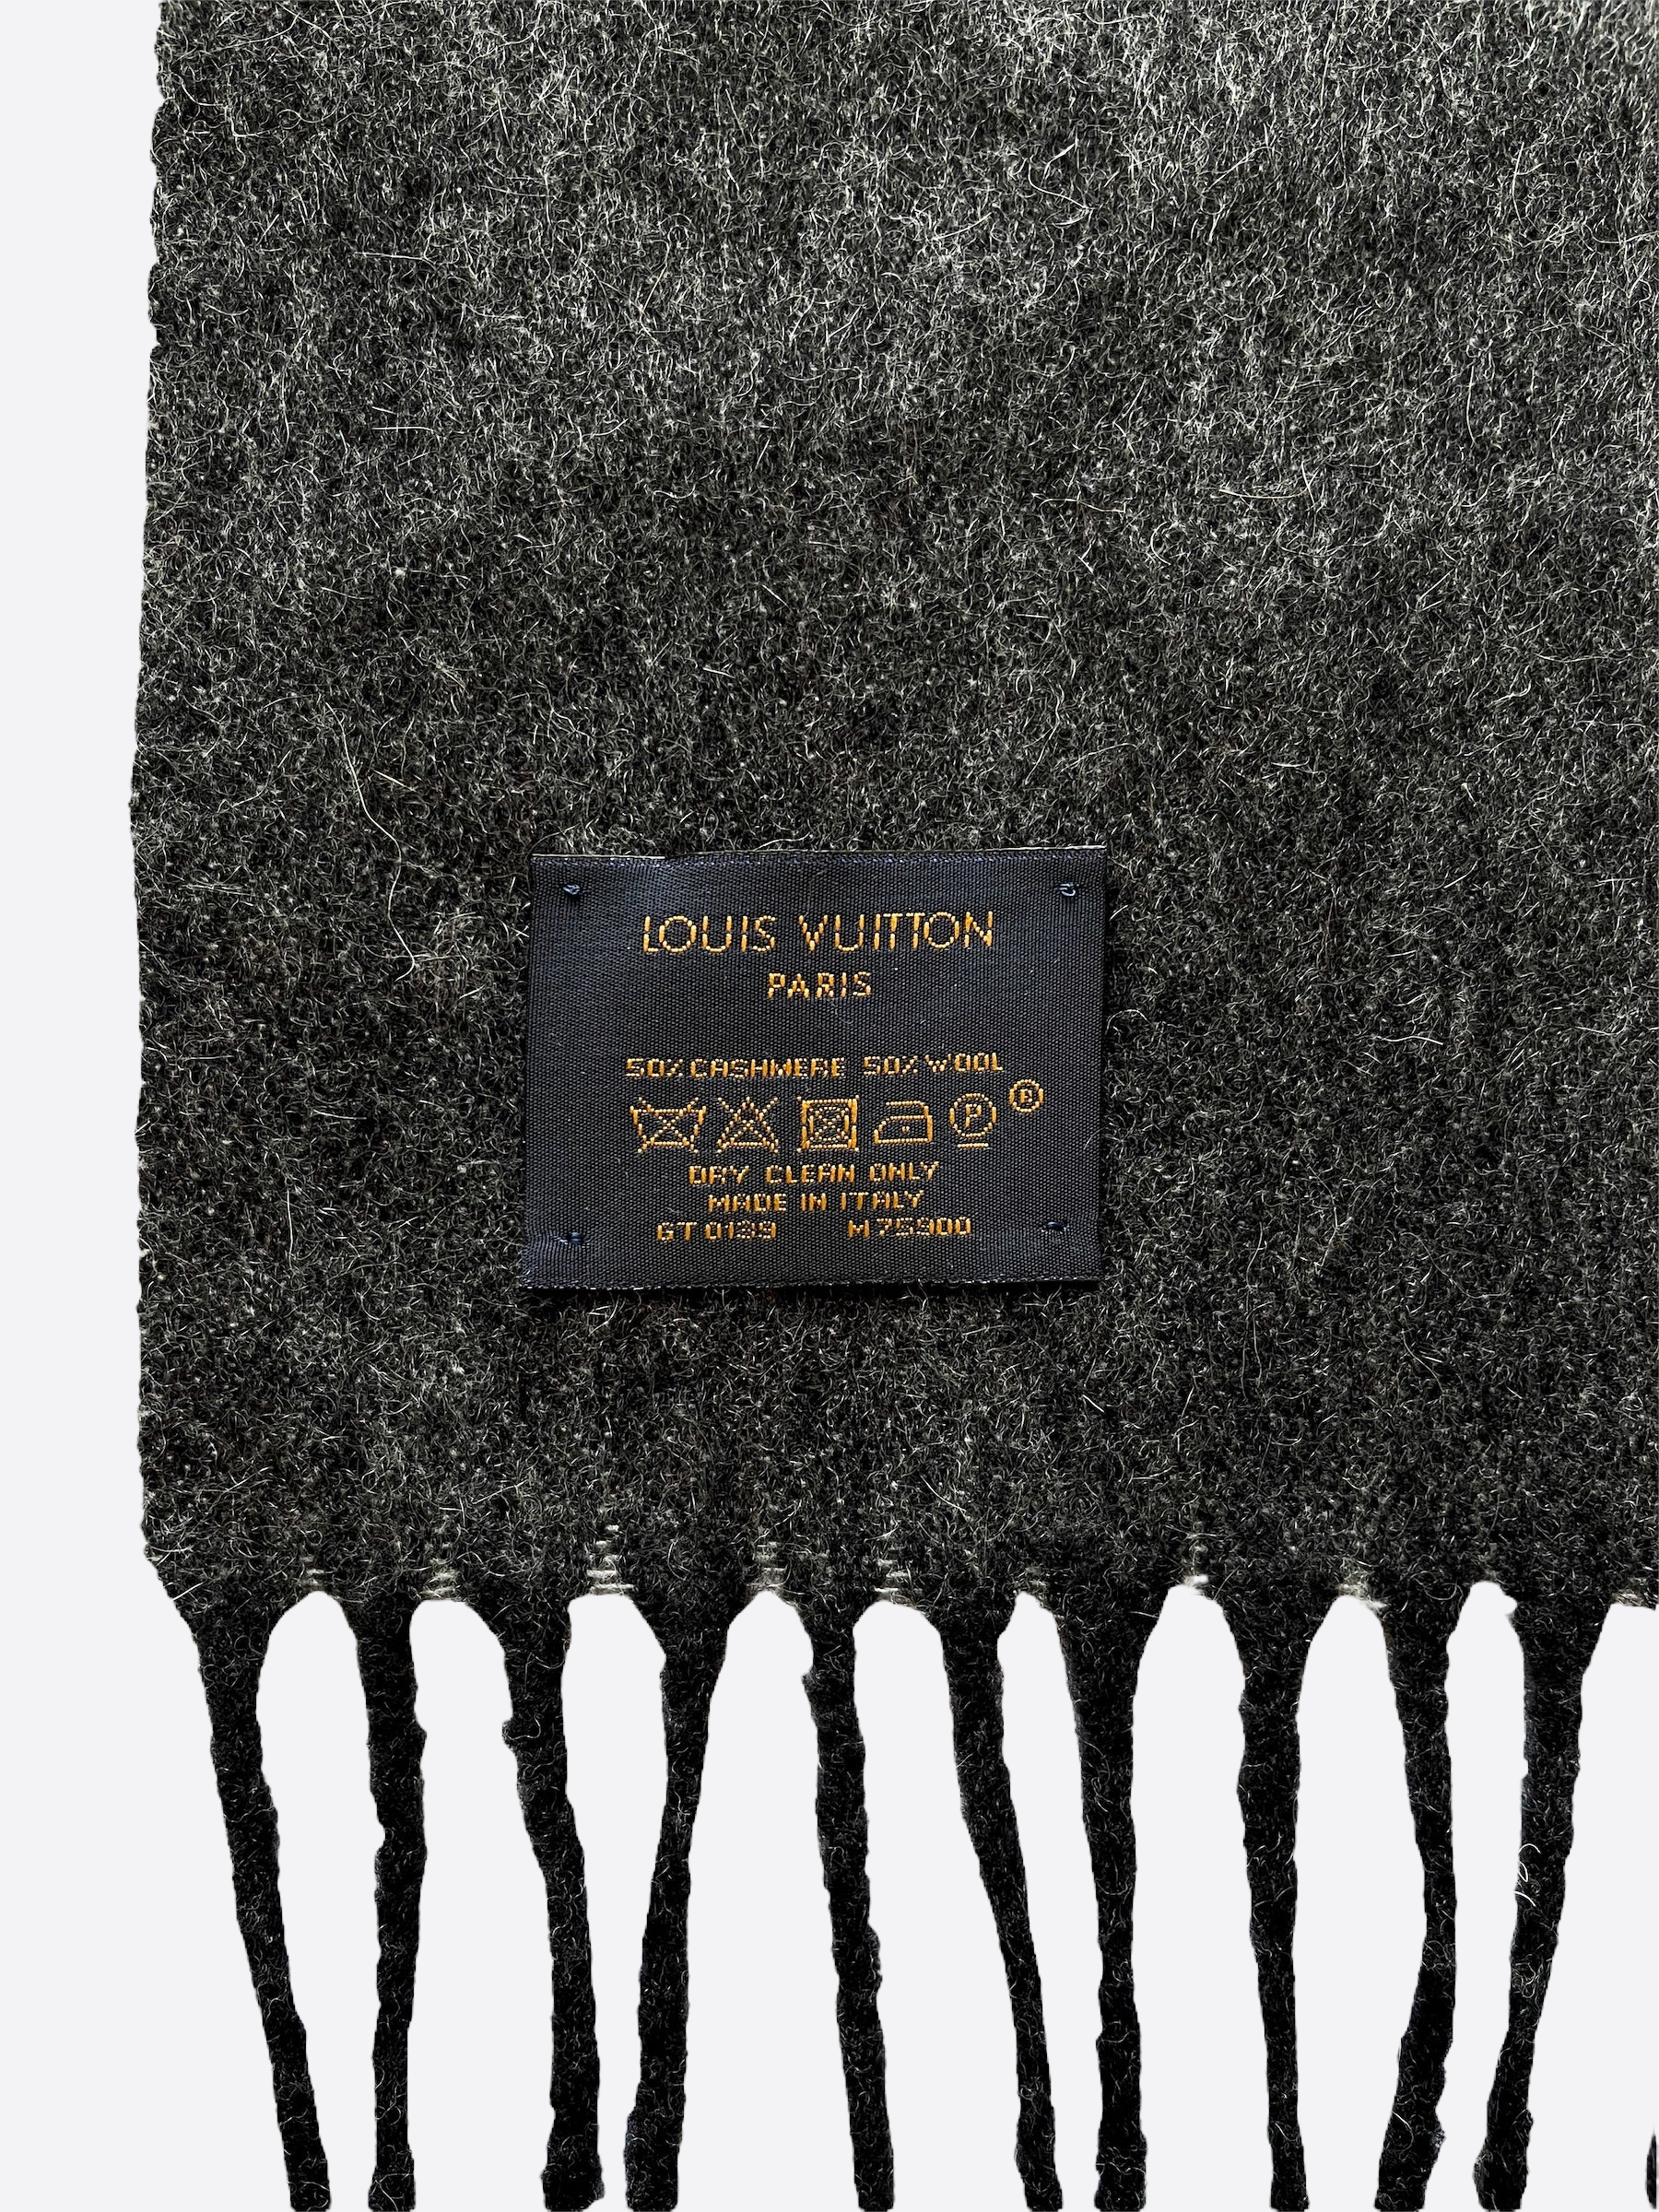 Louis Vuitton MONOGRAM Monogram Wool Cashmere Logo Scarves (M75900)